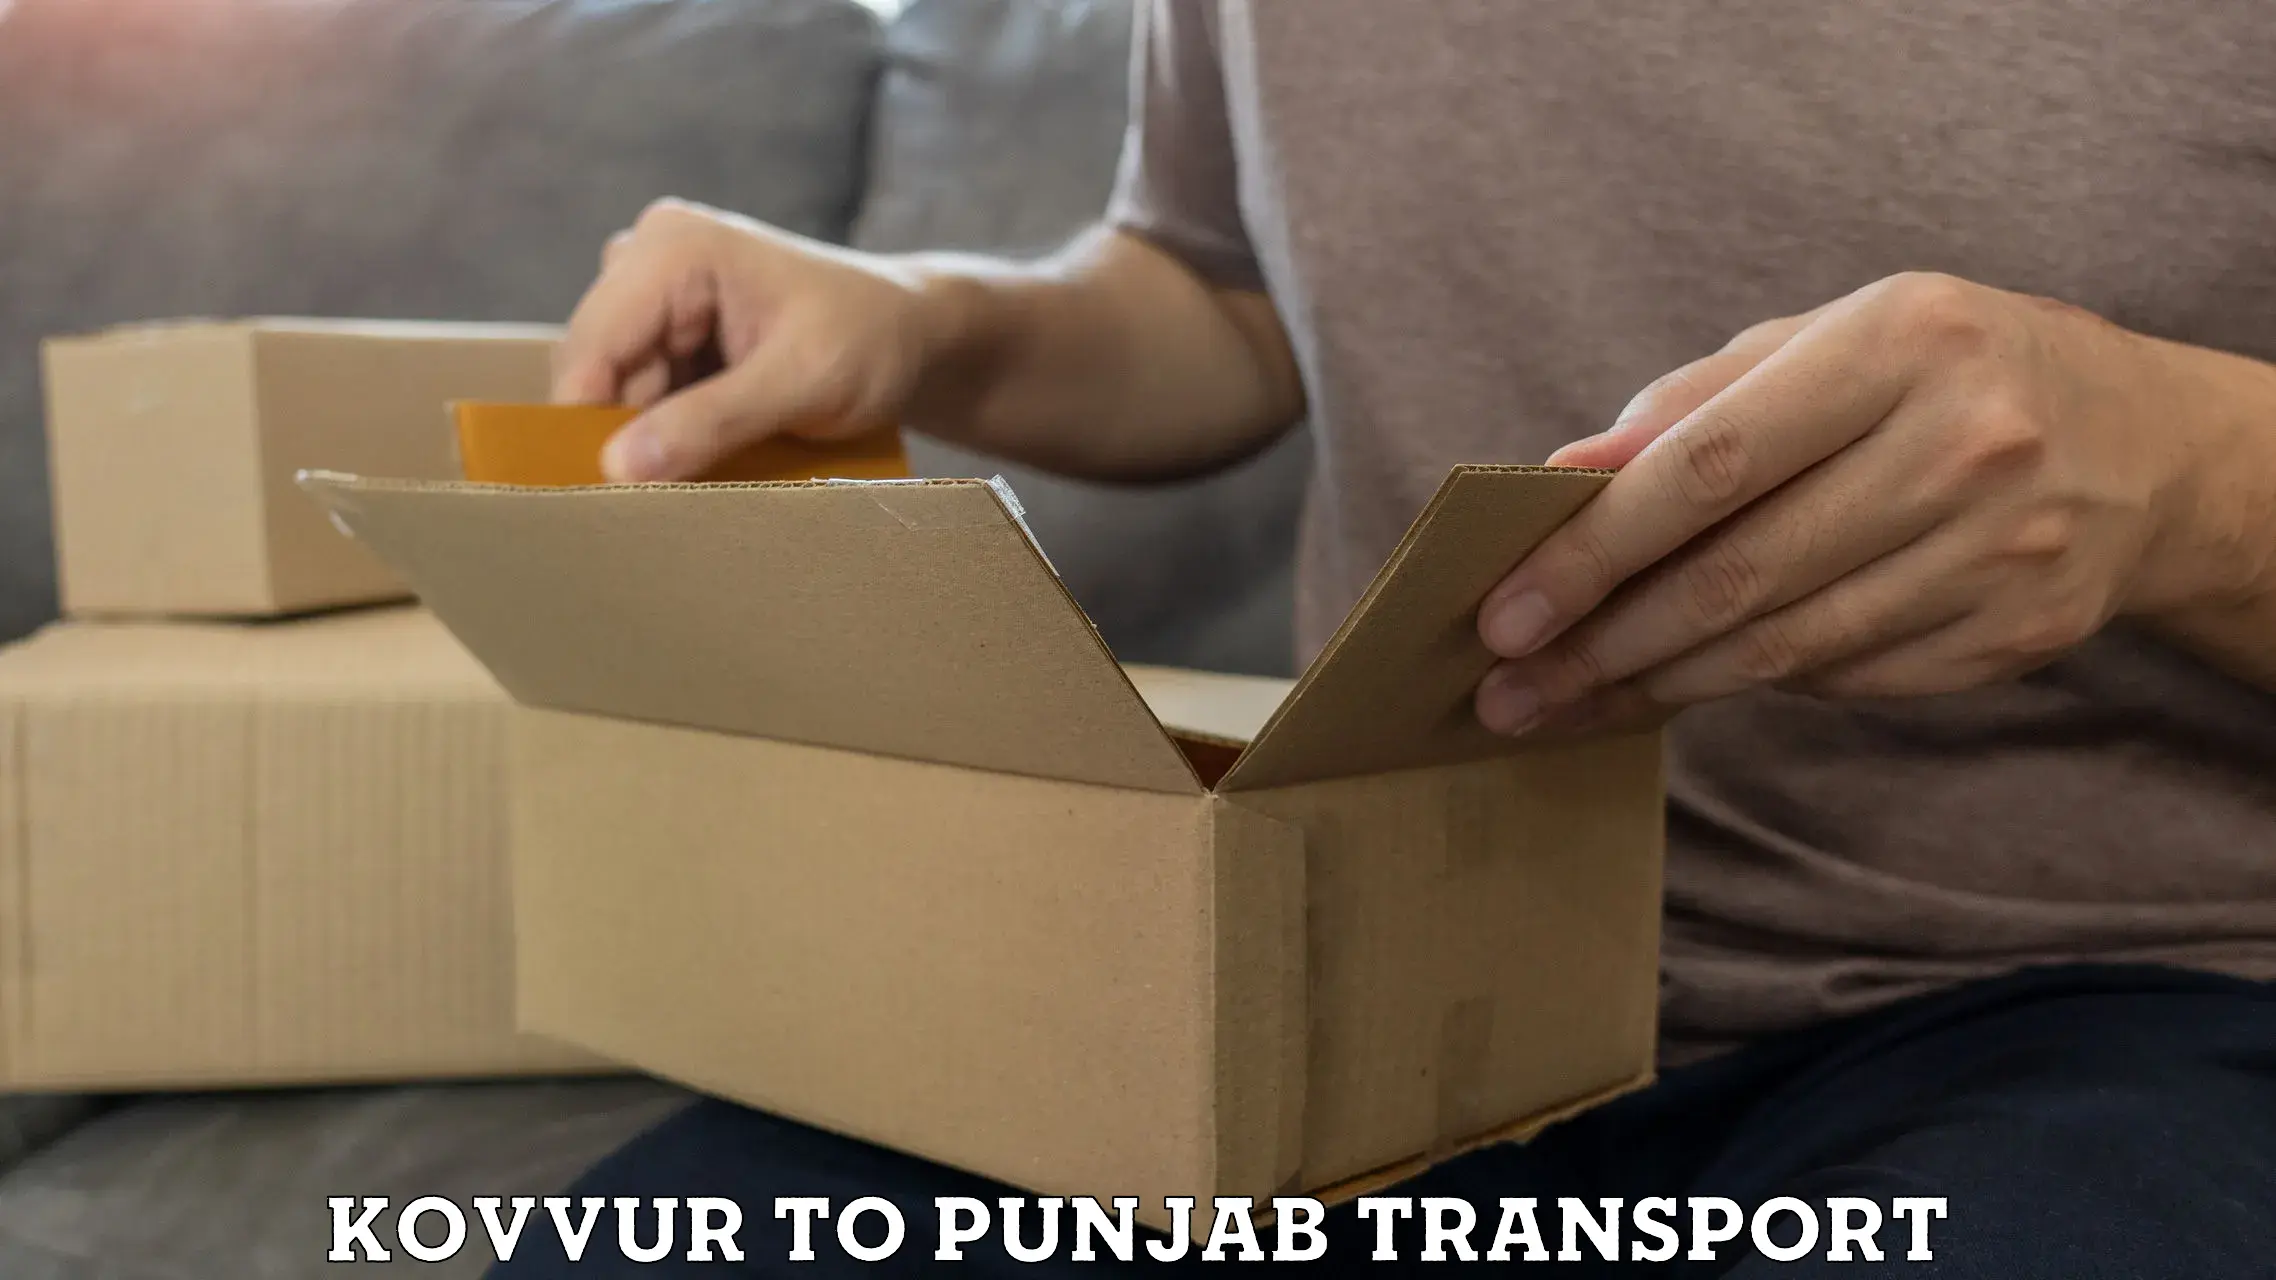 Road transport online services Kovvur to Amritsar